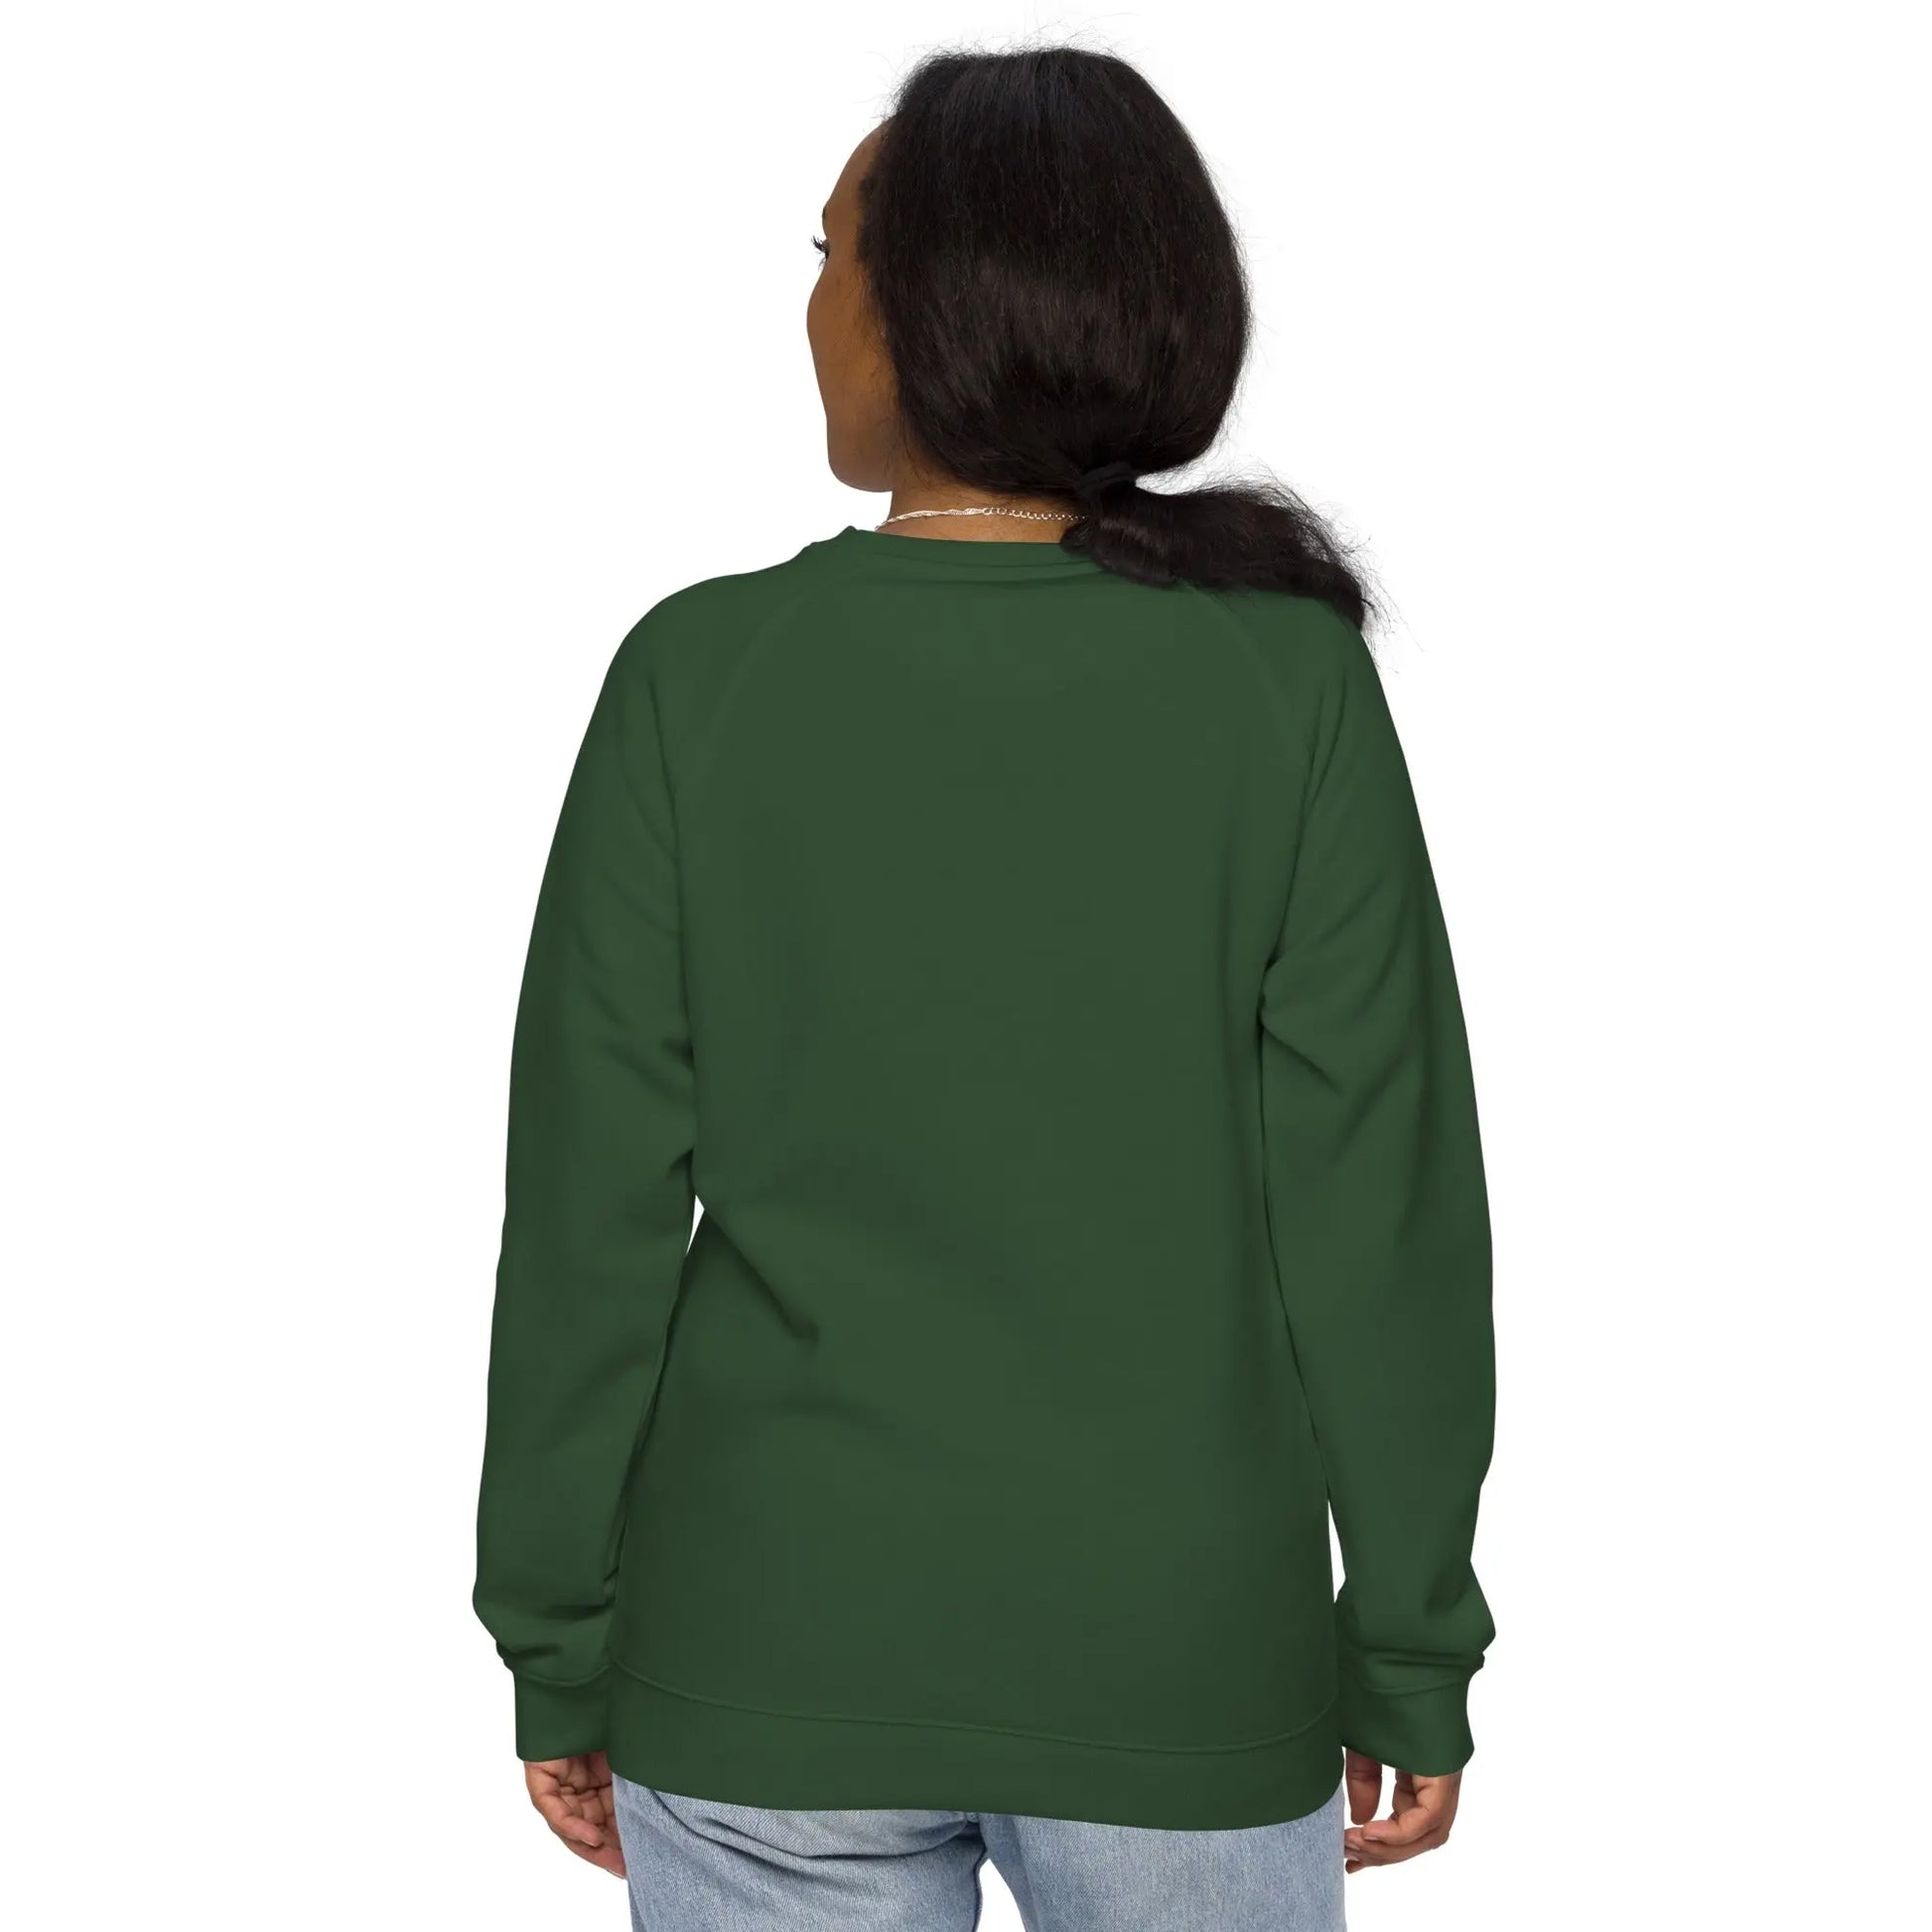 Unisex organic raglan sweatshirt - Image #11